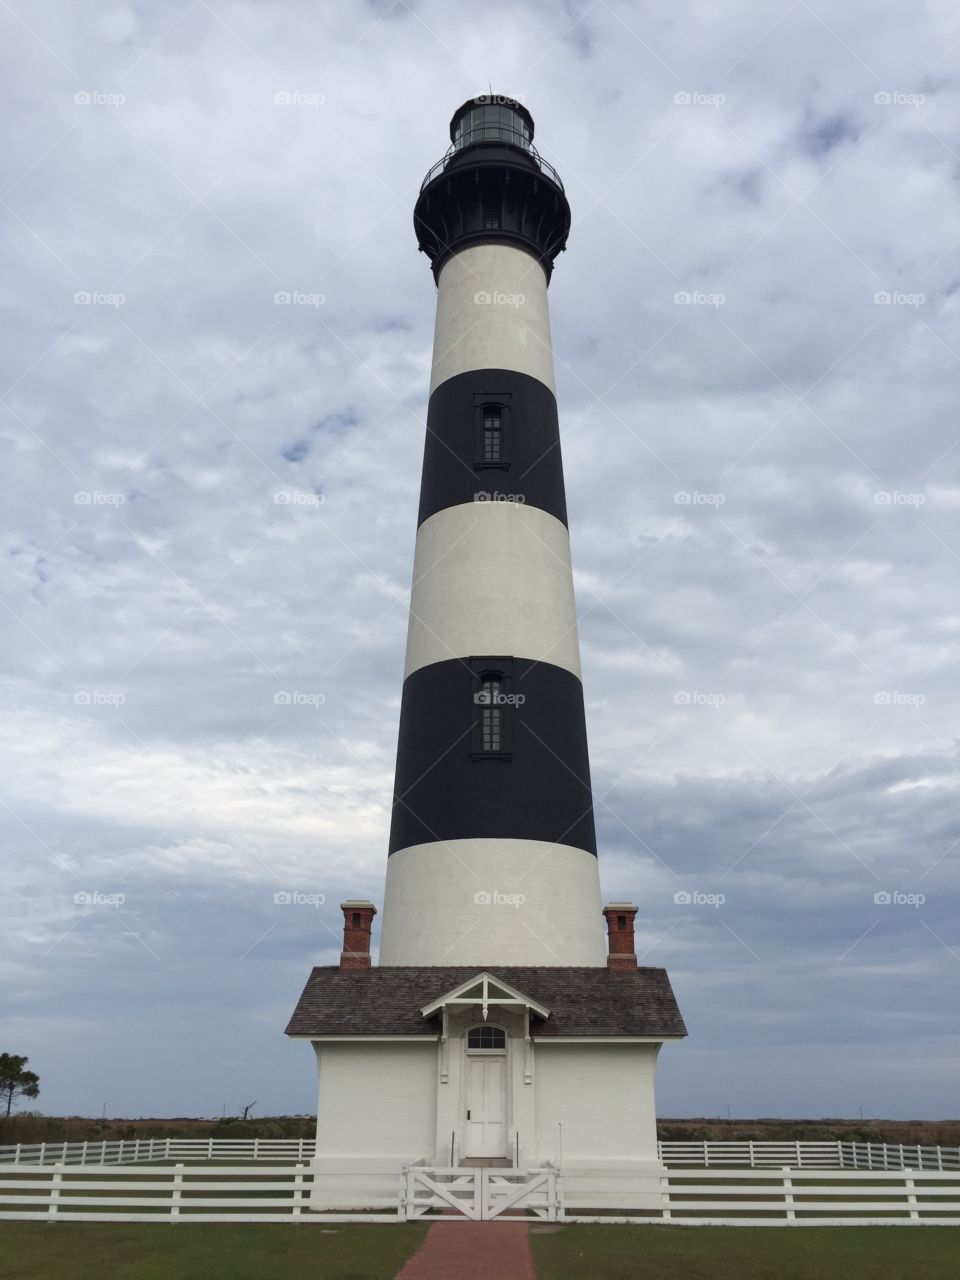 Bodie Island Lighthouse. Bodie Island, NC

